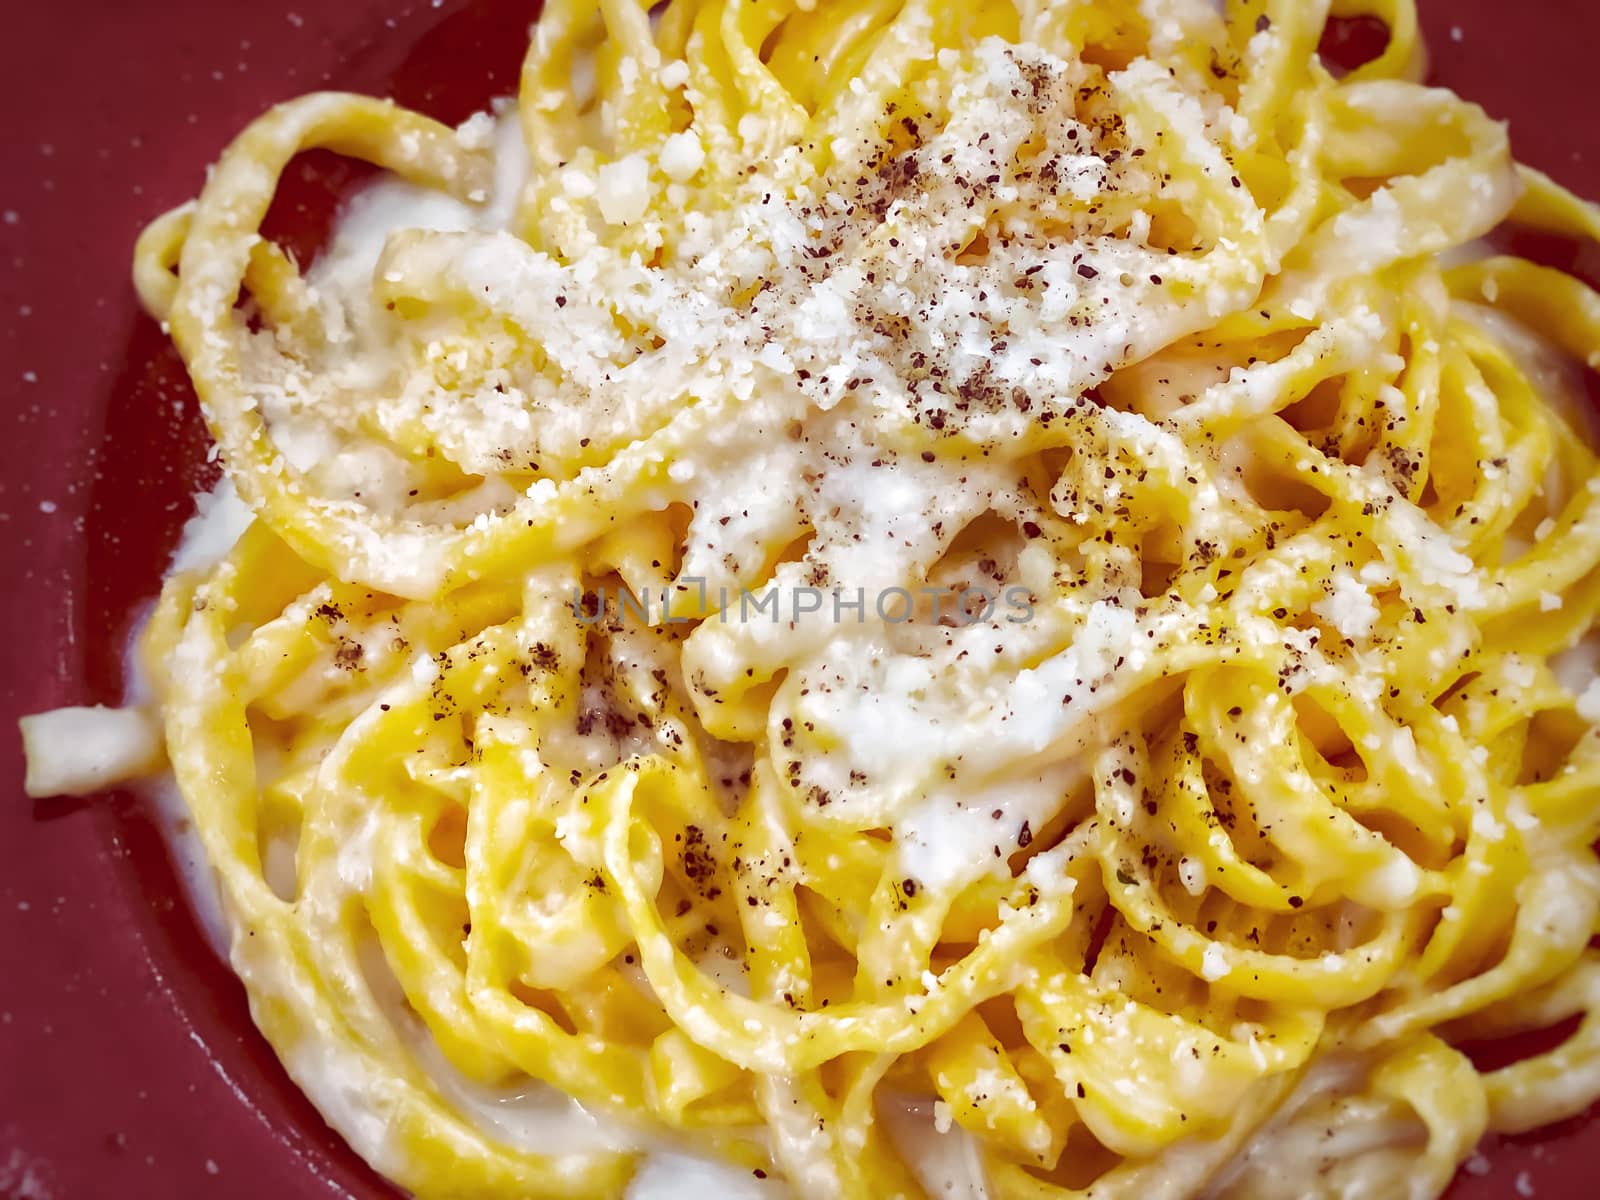 A portion of Italian traditional pasta with cacio e pepe - cheese and pepper- sauce by rarrarorro